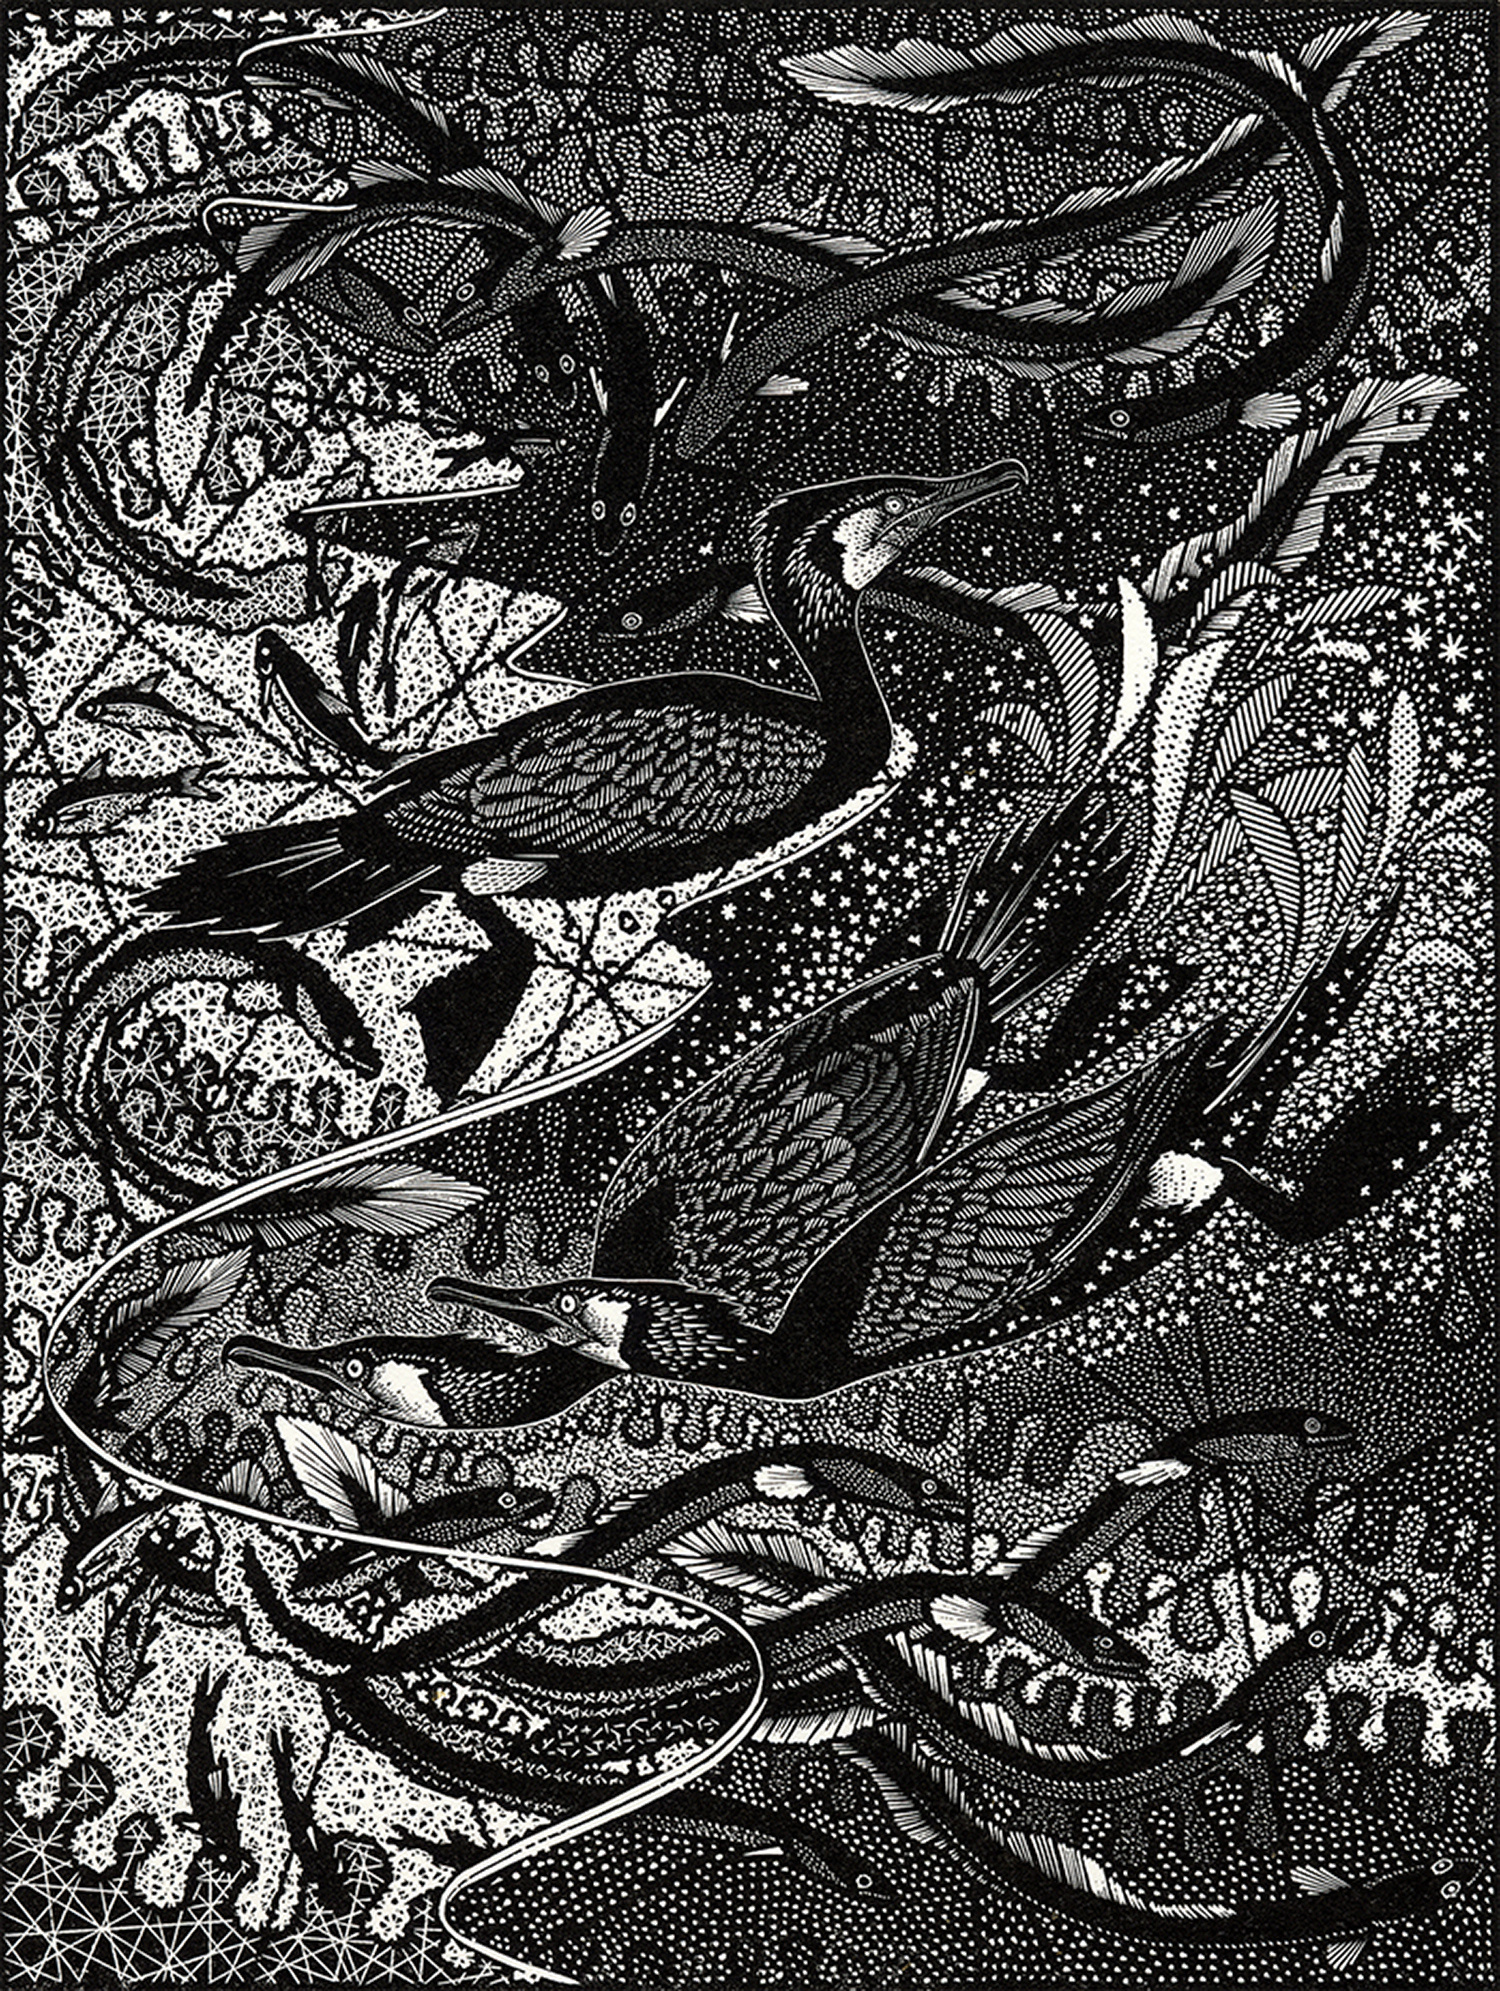 Cormorants & Eels by Colin See-Paynton